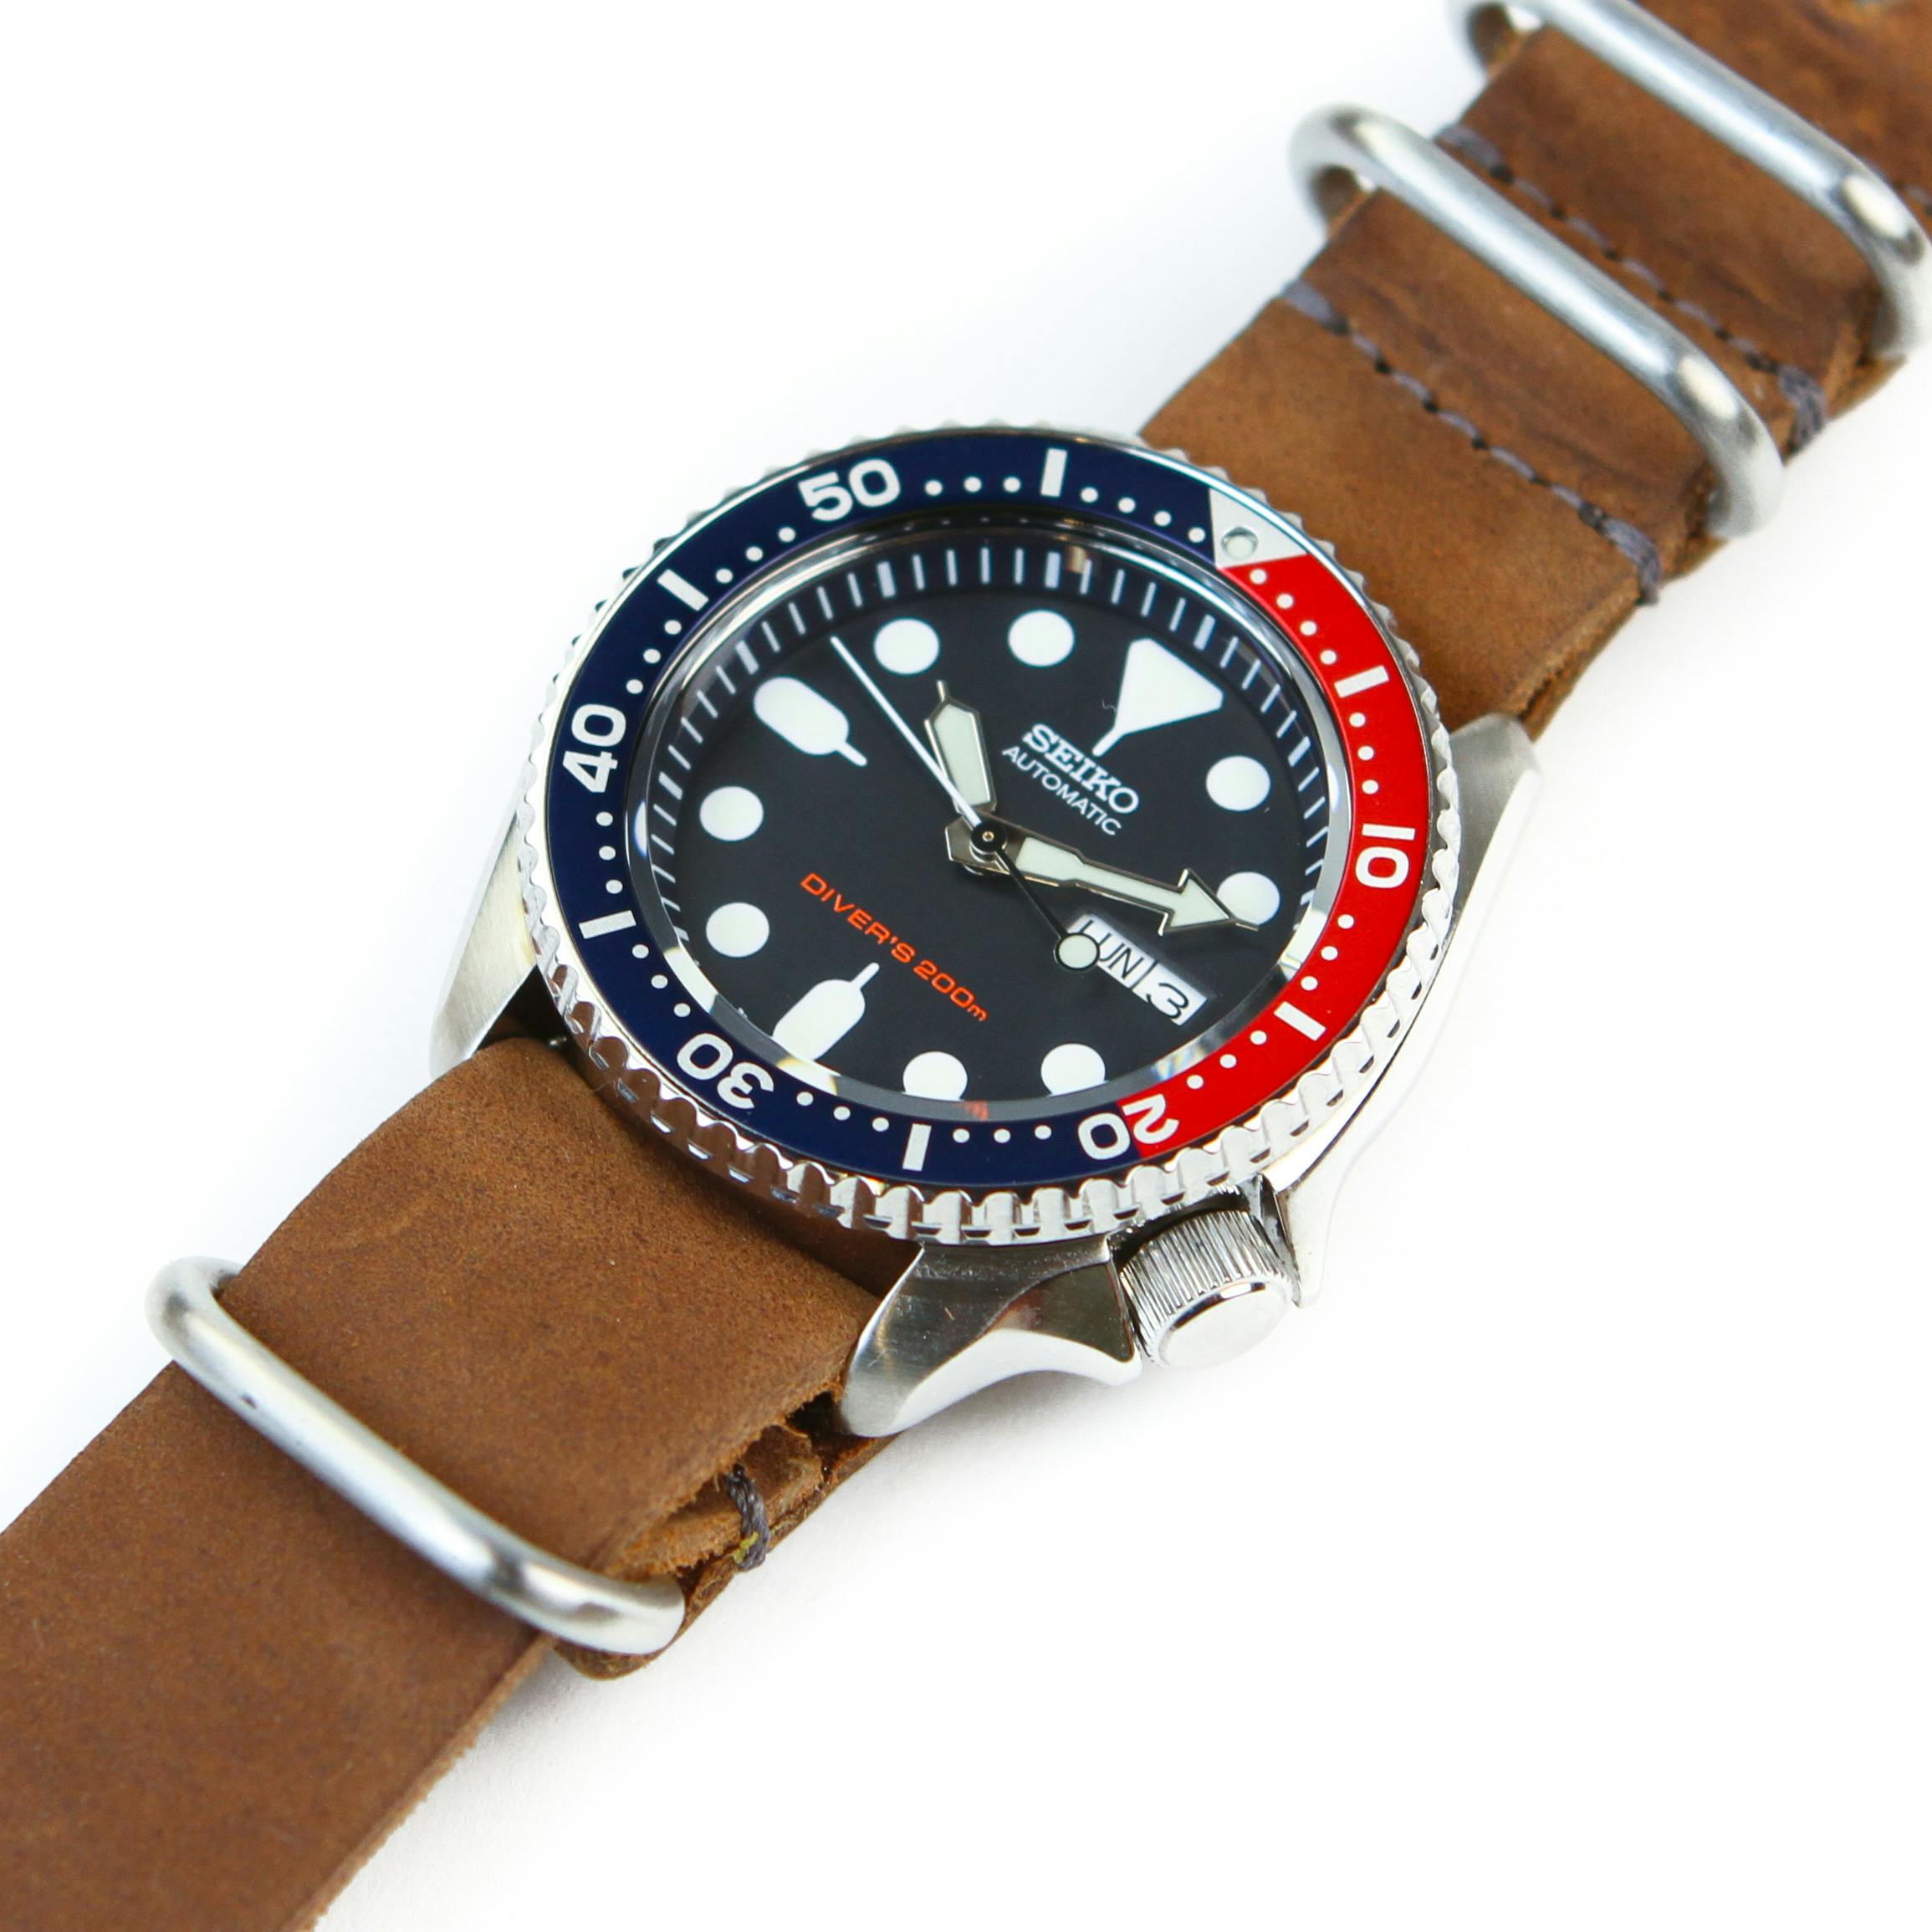 Huckberry Seiko Dive Watch - Red/ Blue/ Brown | Watches | Huckberry